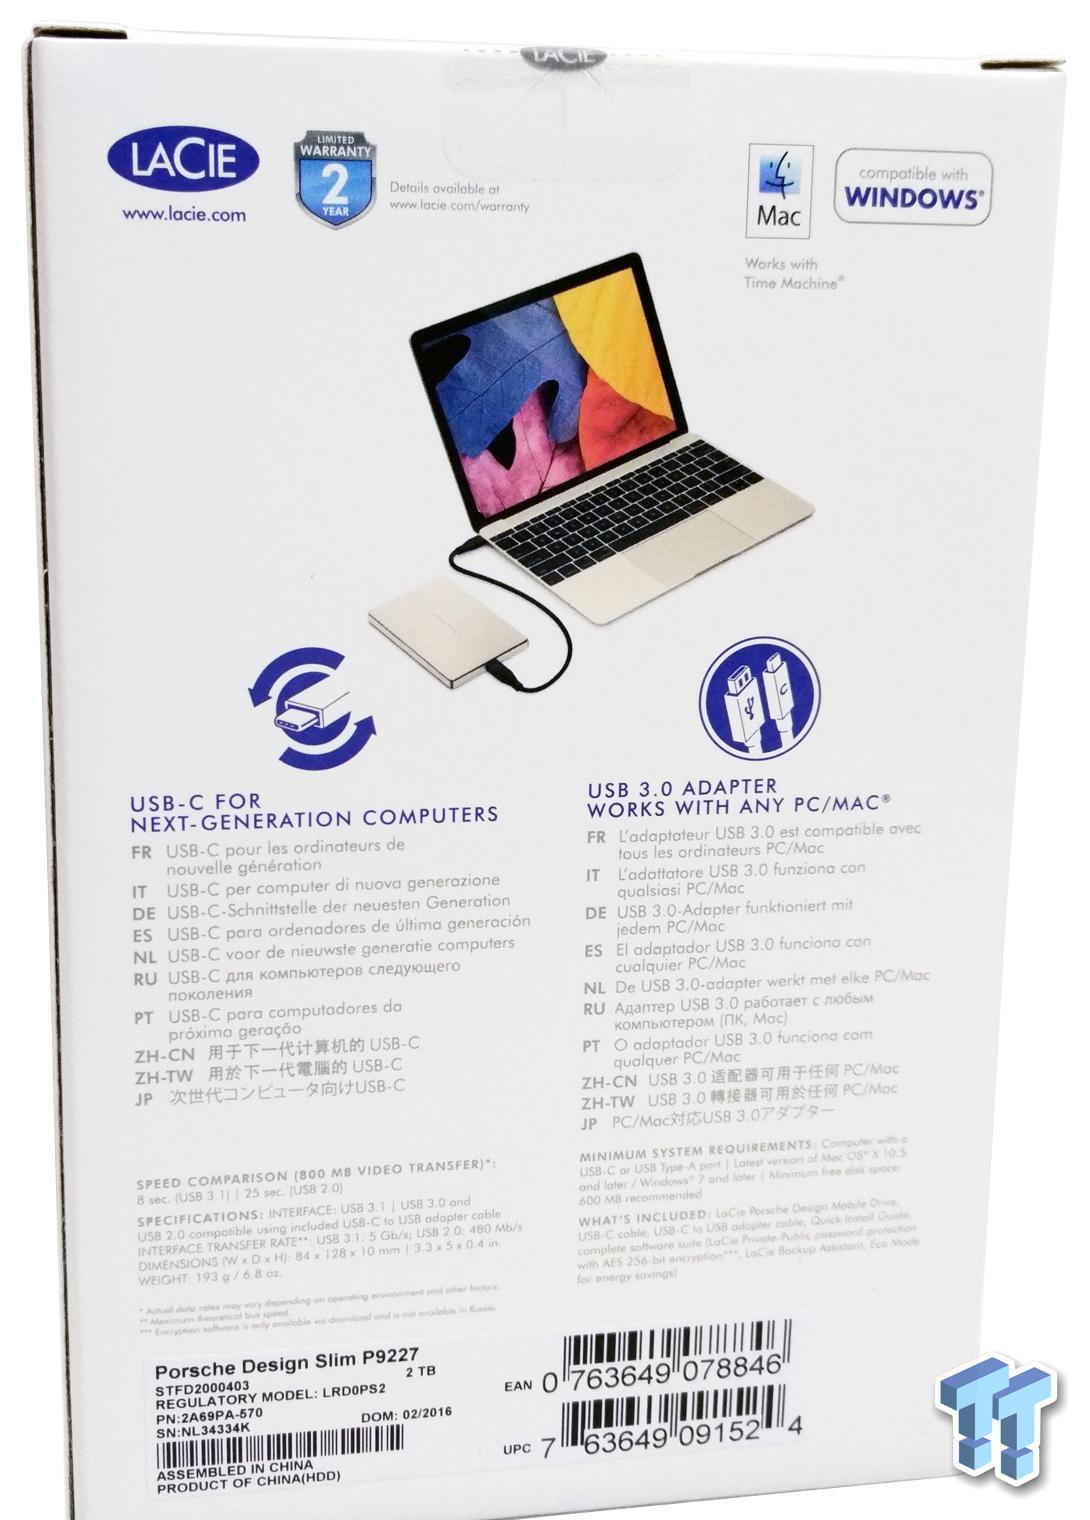 lacie 2tb p’9227 porsche design usb-c mobile hard drive okay for back up for mac